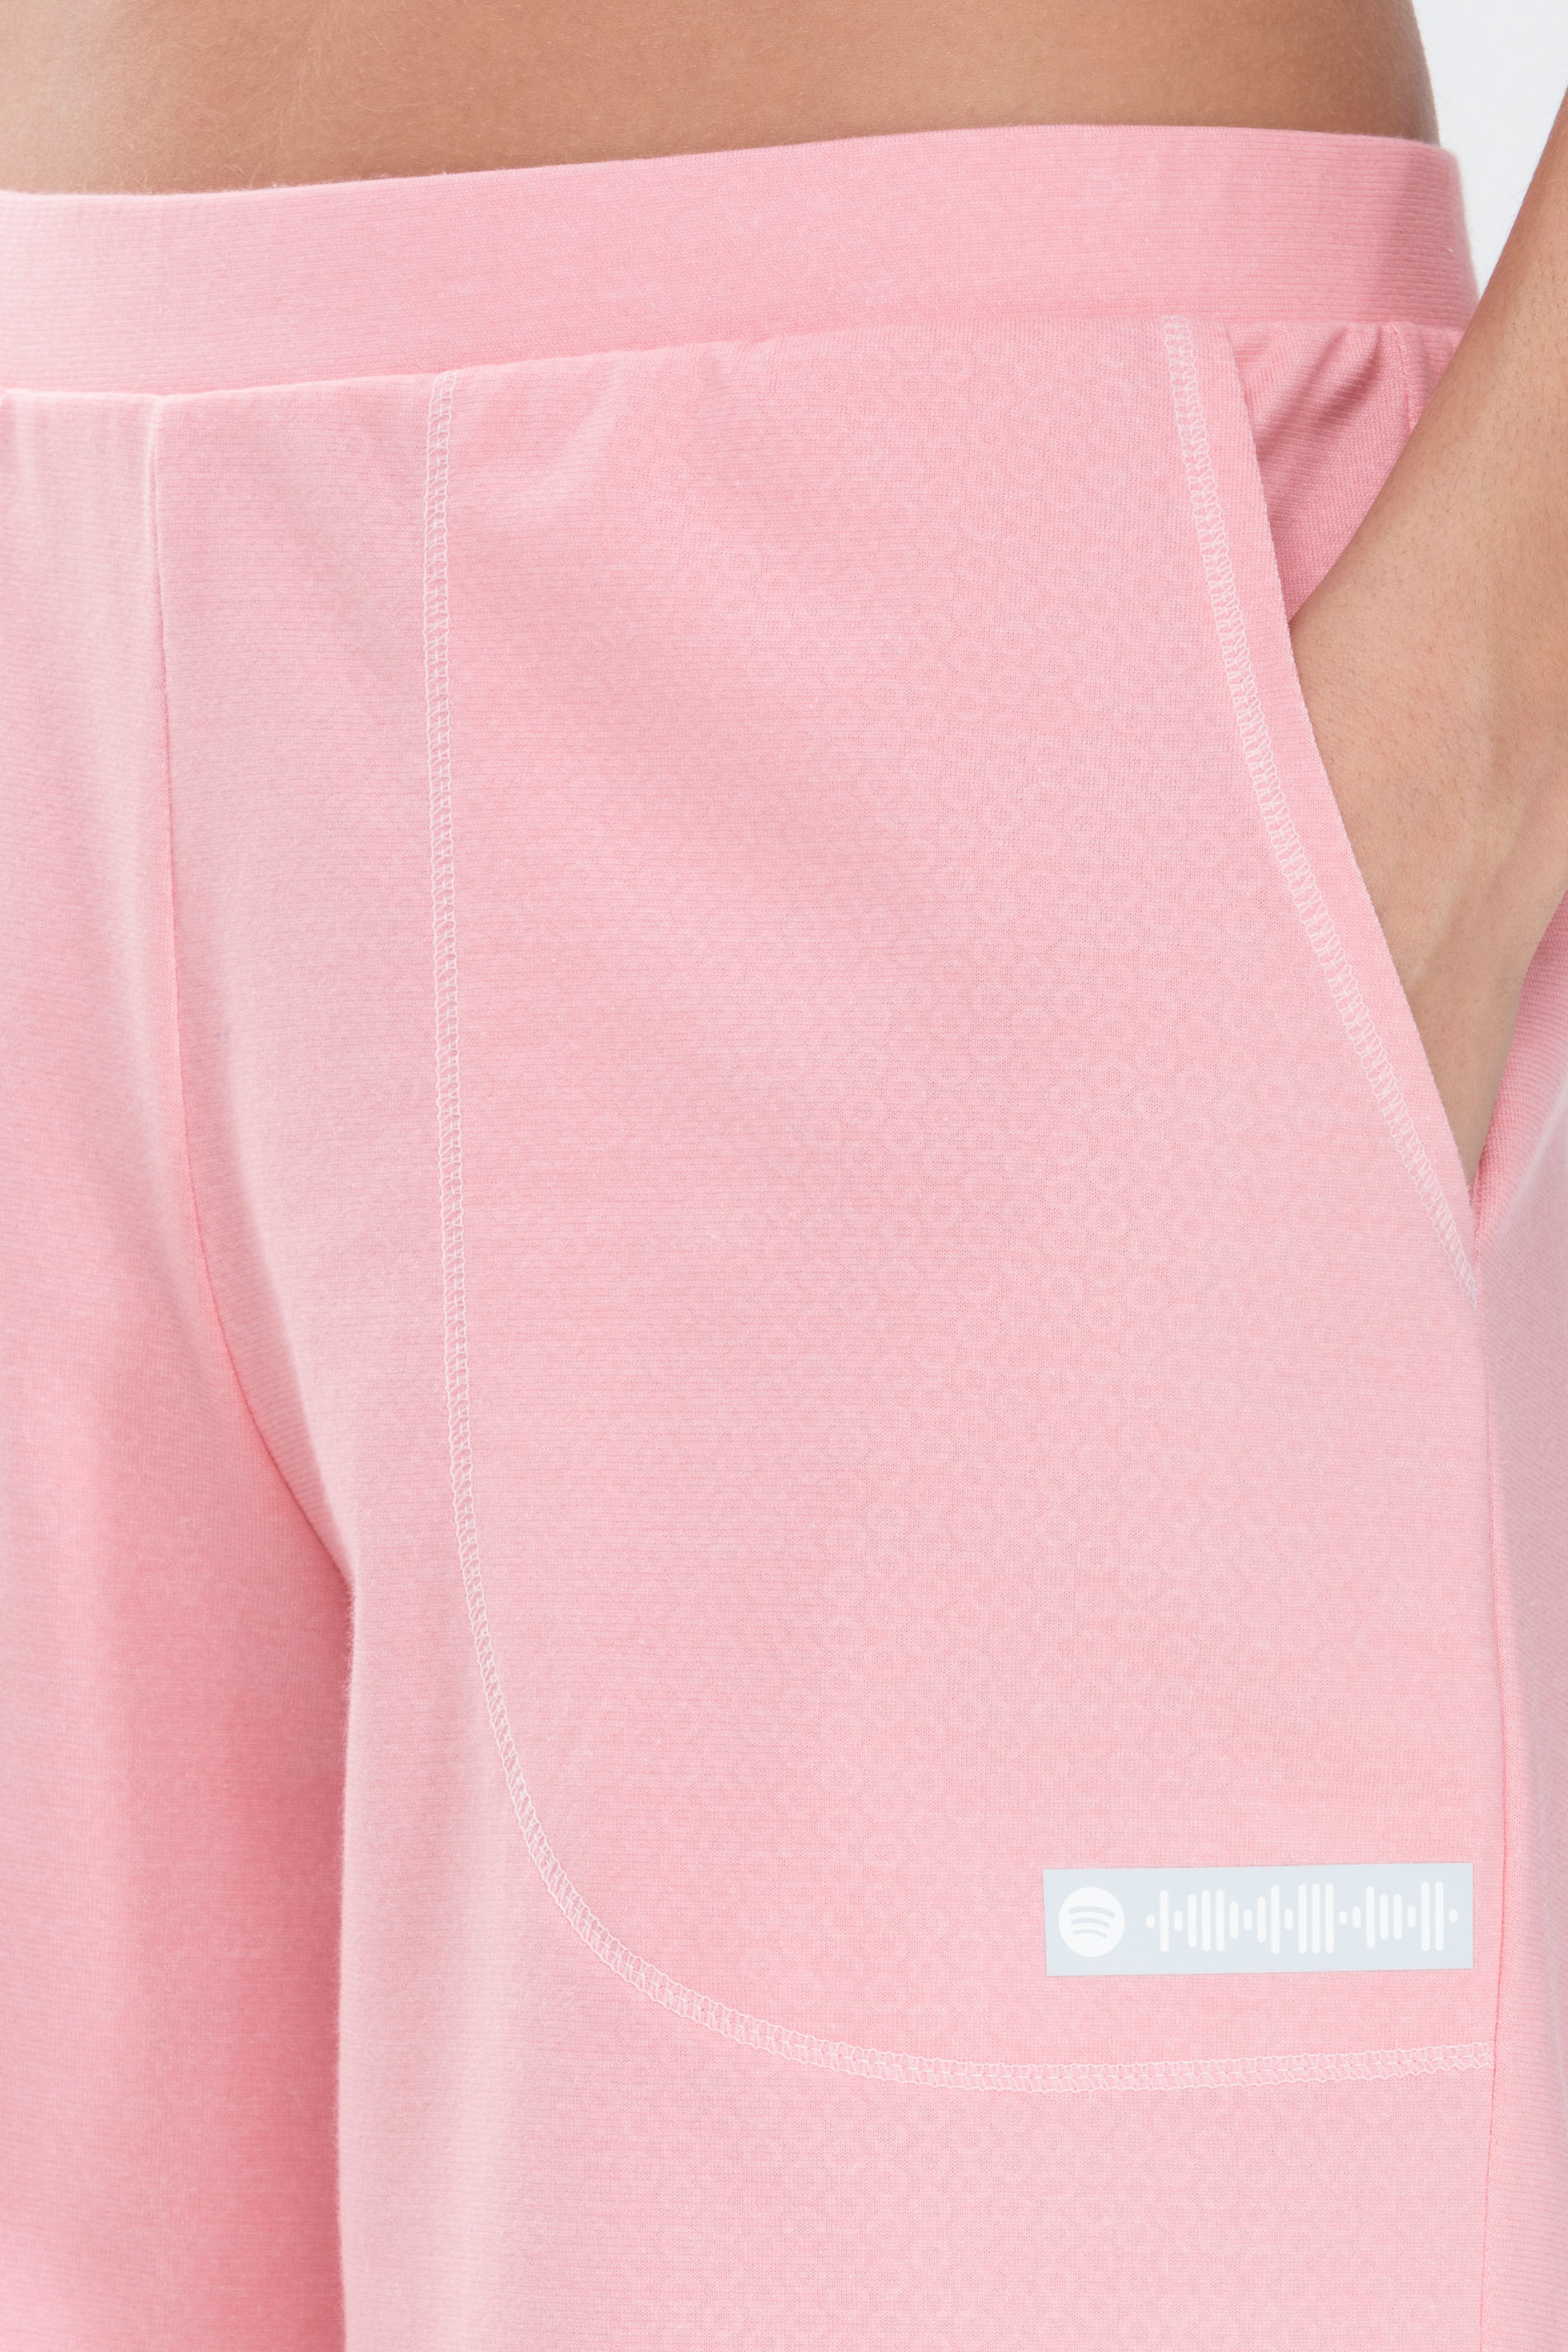 T-shirt Powder Pink Serie Zzzleepwear Detail View 02 | mey®